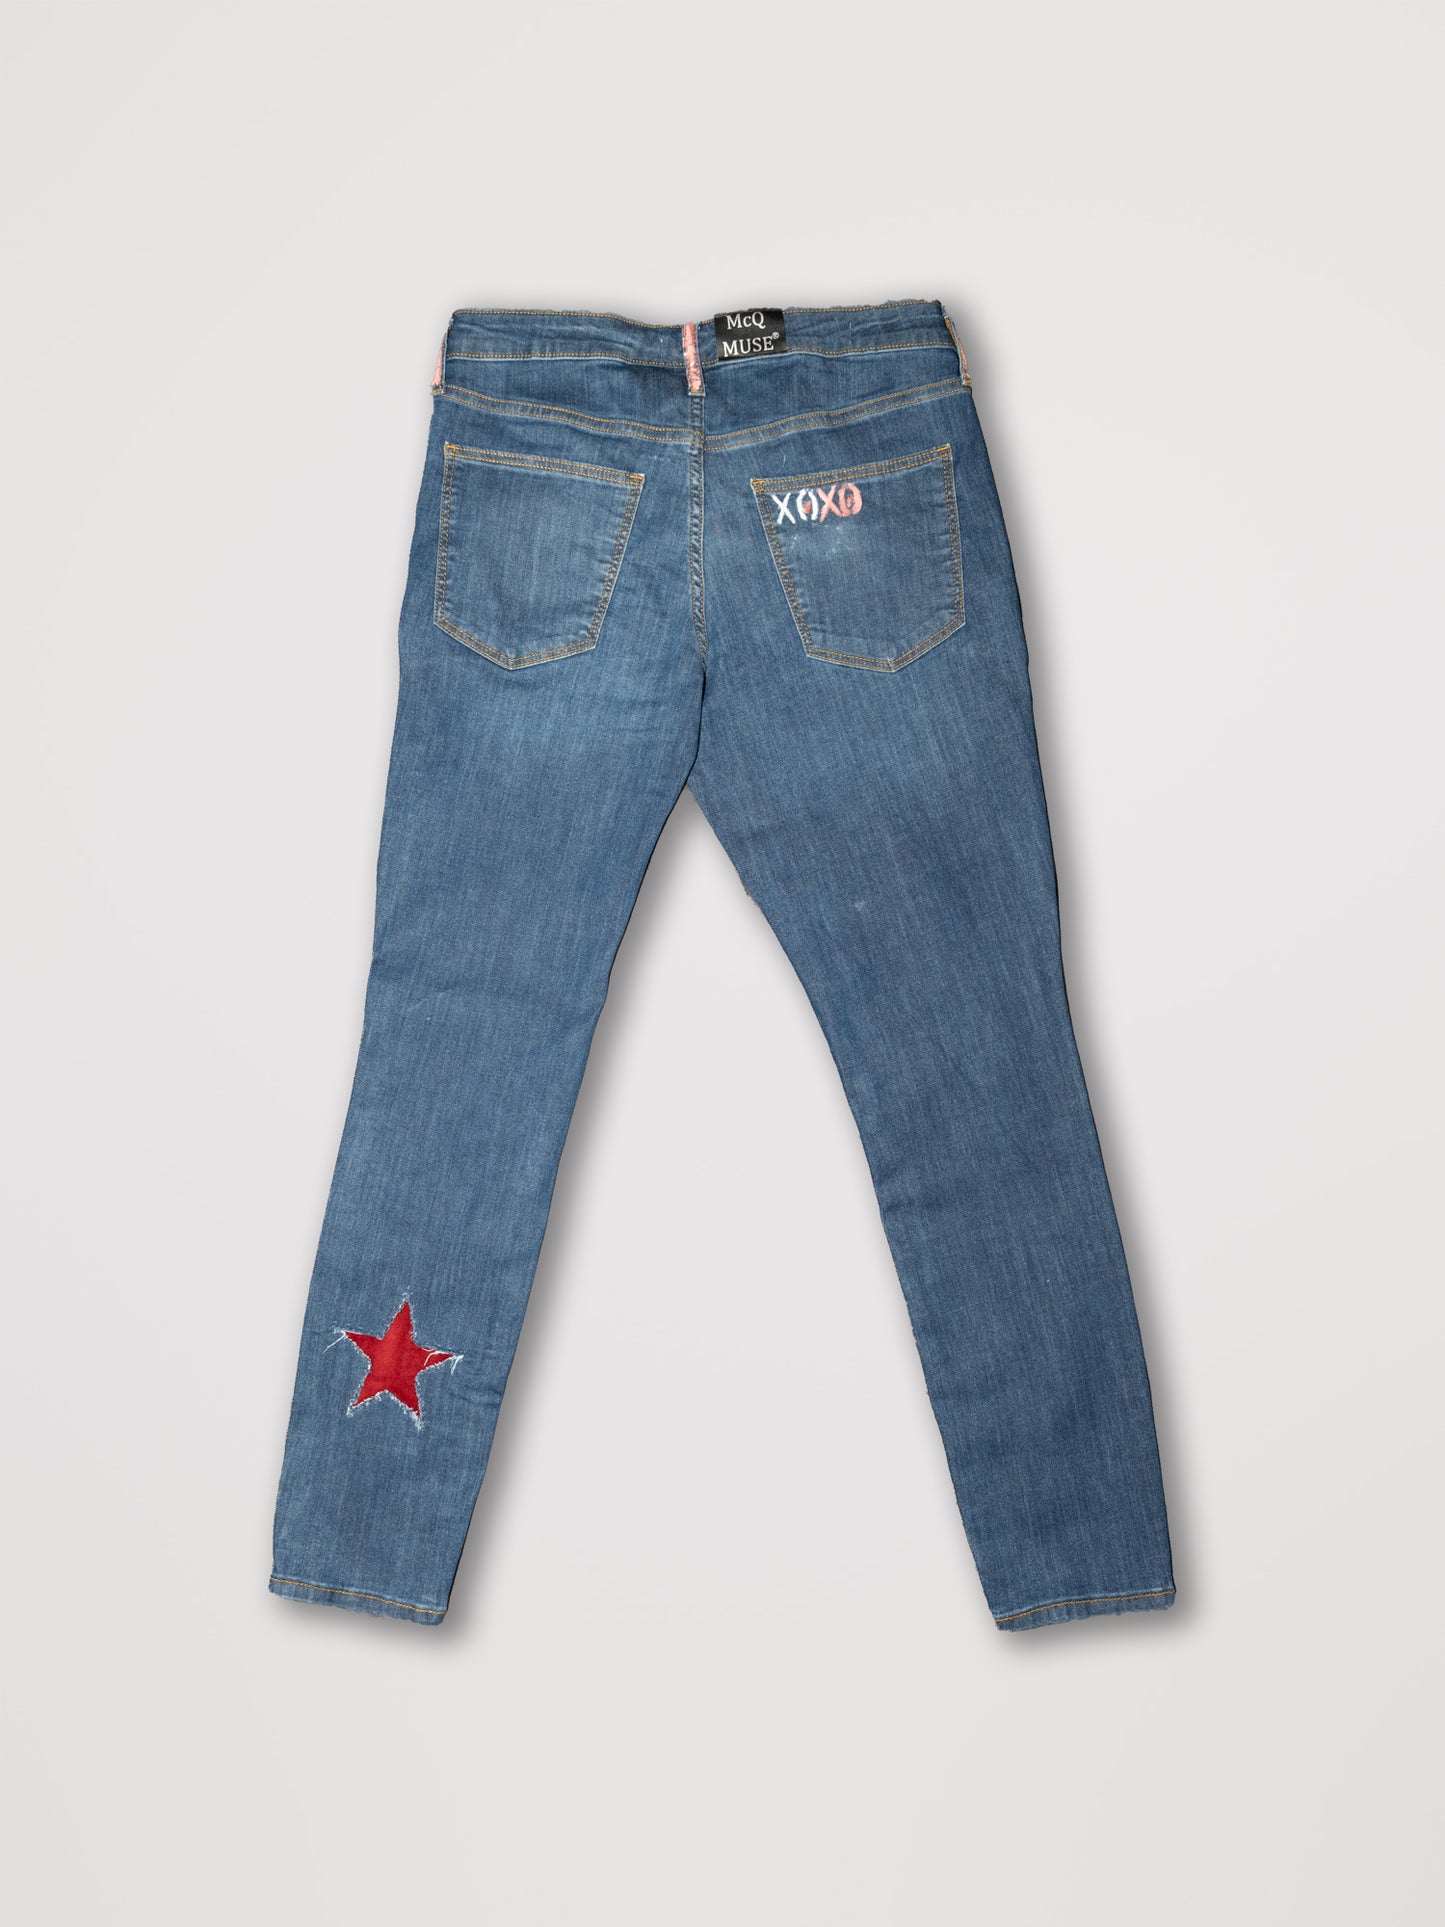 Woman's Star-Classic16 Designer Jeans